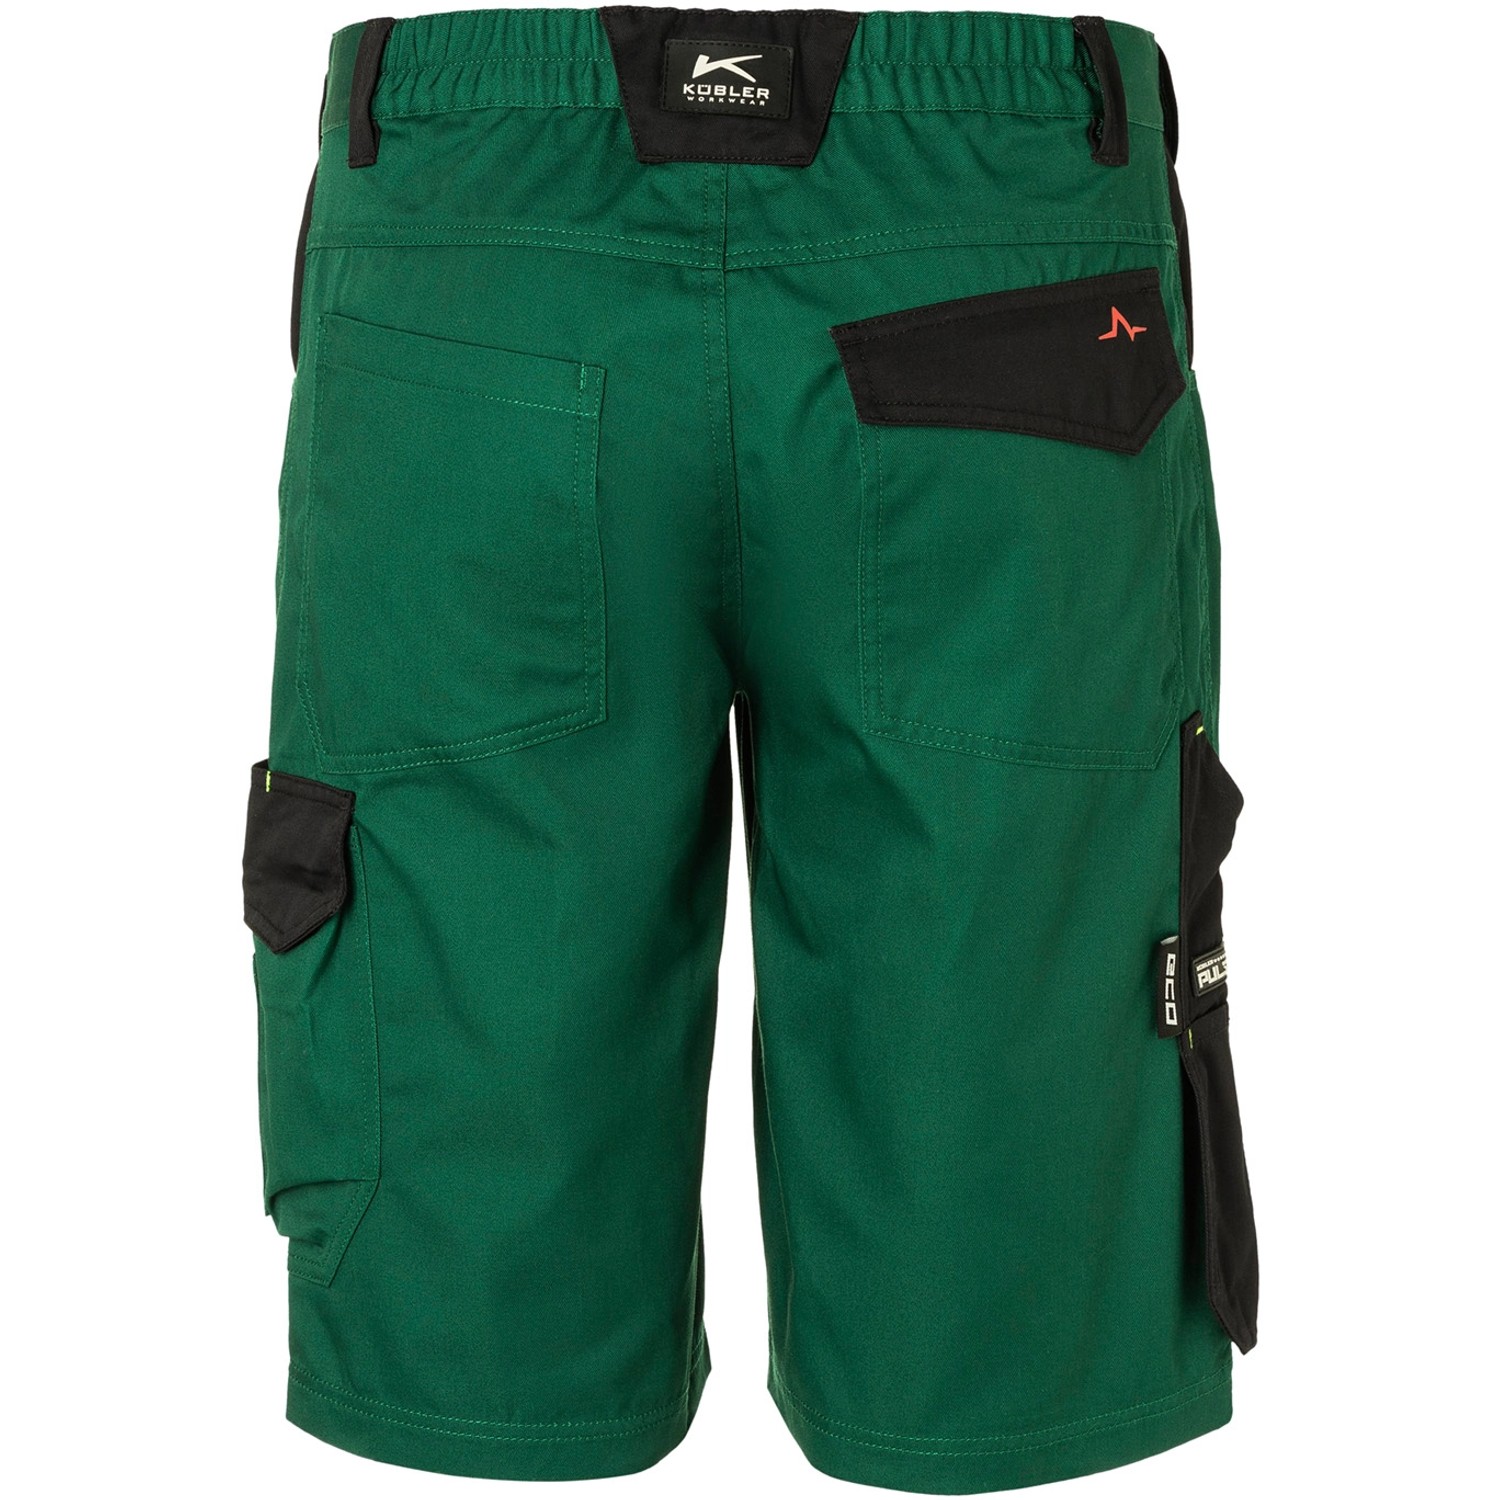 Kübler Pulse Eco Shorts Moosgrün/Schwarz Gr. 56 von Kübler Workwear